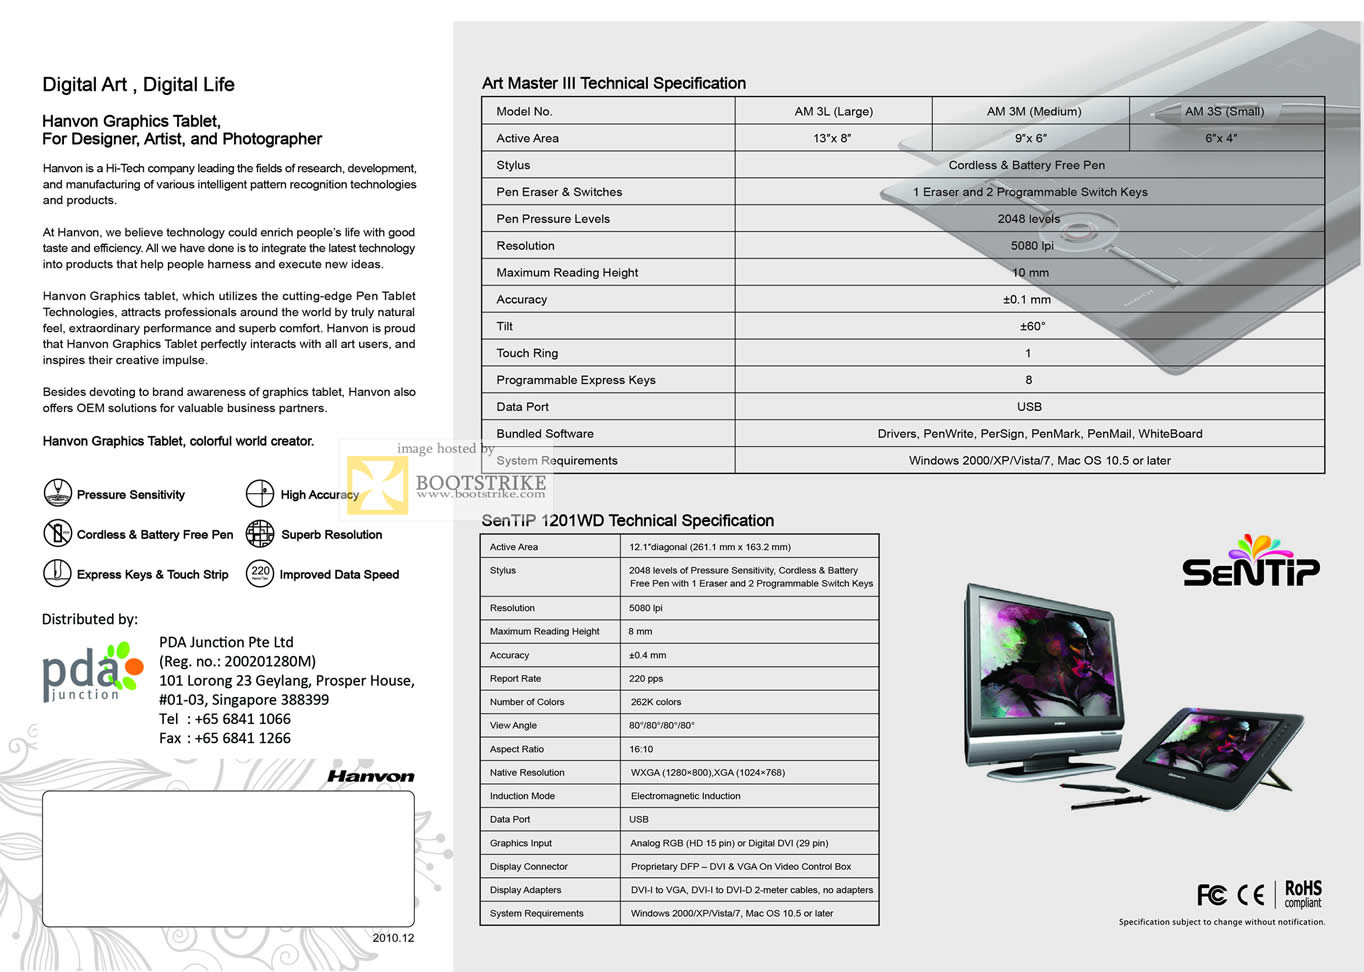 PC Show 2011 price list image brochure of IKnow Hanvon Graphics Tablet Art Master III SenTIP 1201WD Specifications